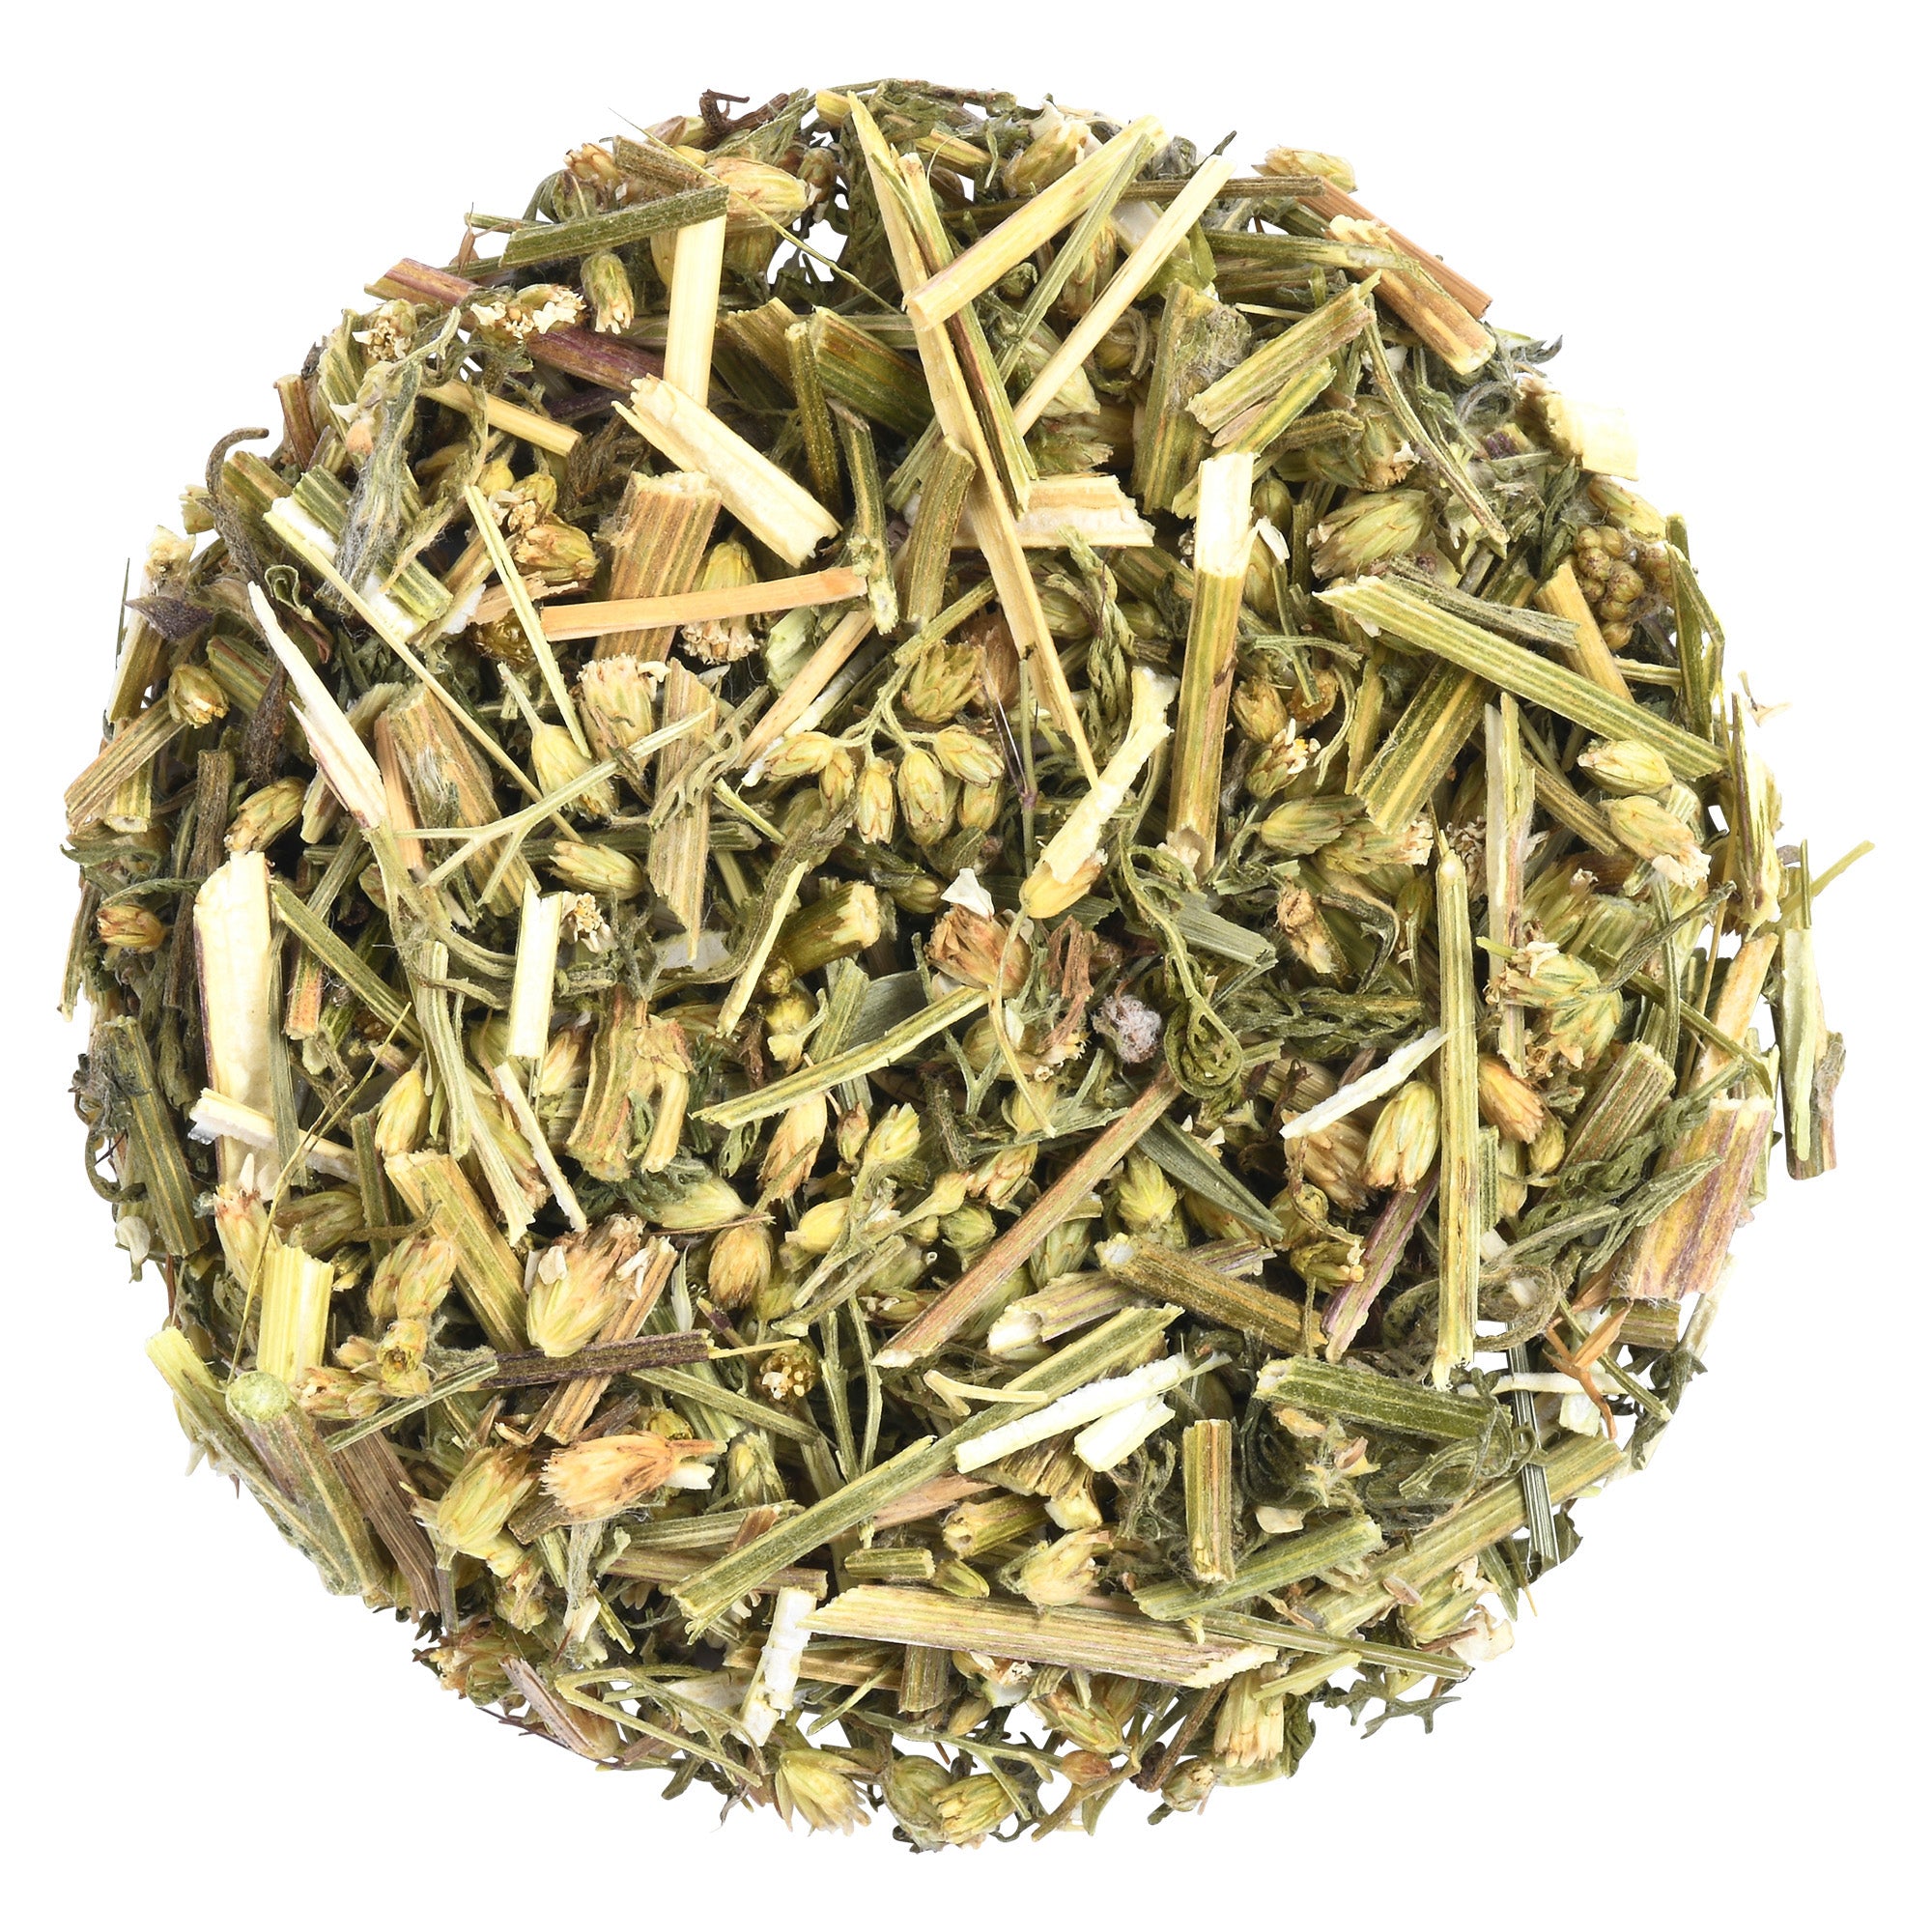 Yarrow (Achillea Millefolium) Organic Dried Herb Herbal Tea